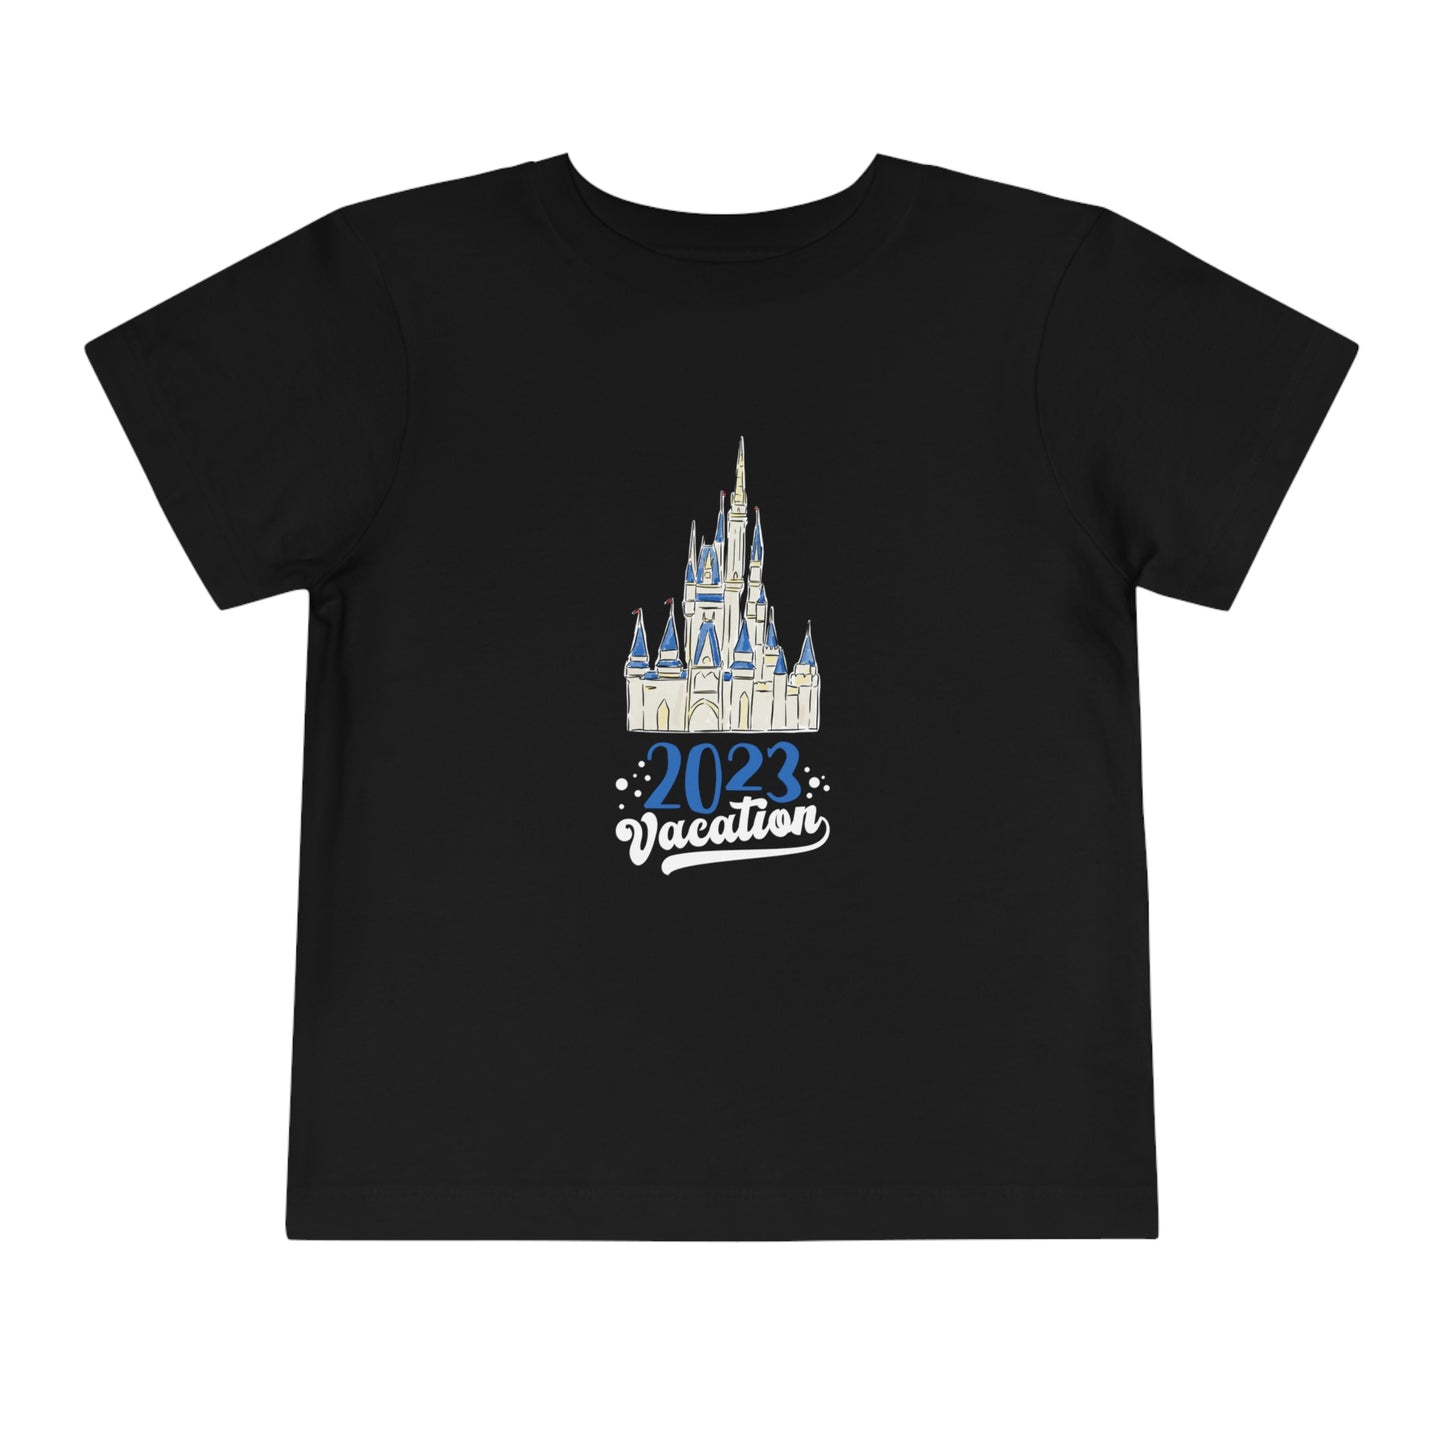 2023 Disney Vacation - Toddler T-shirt